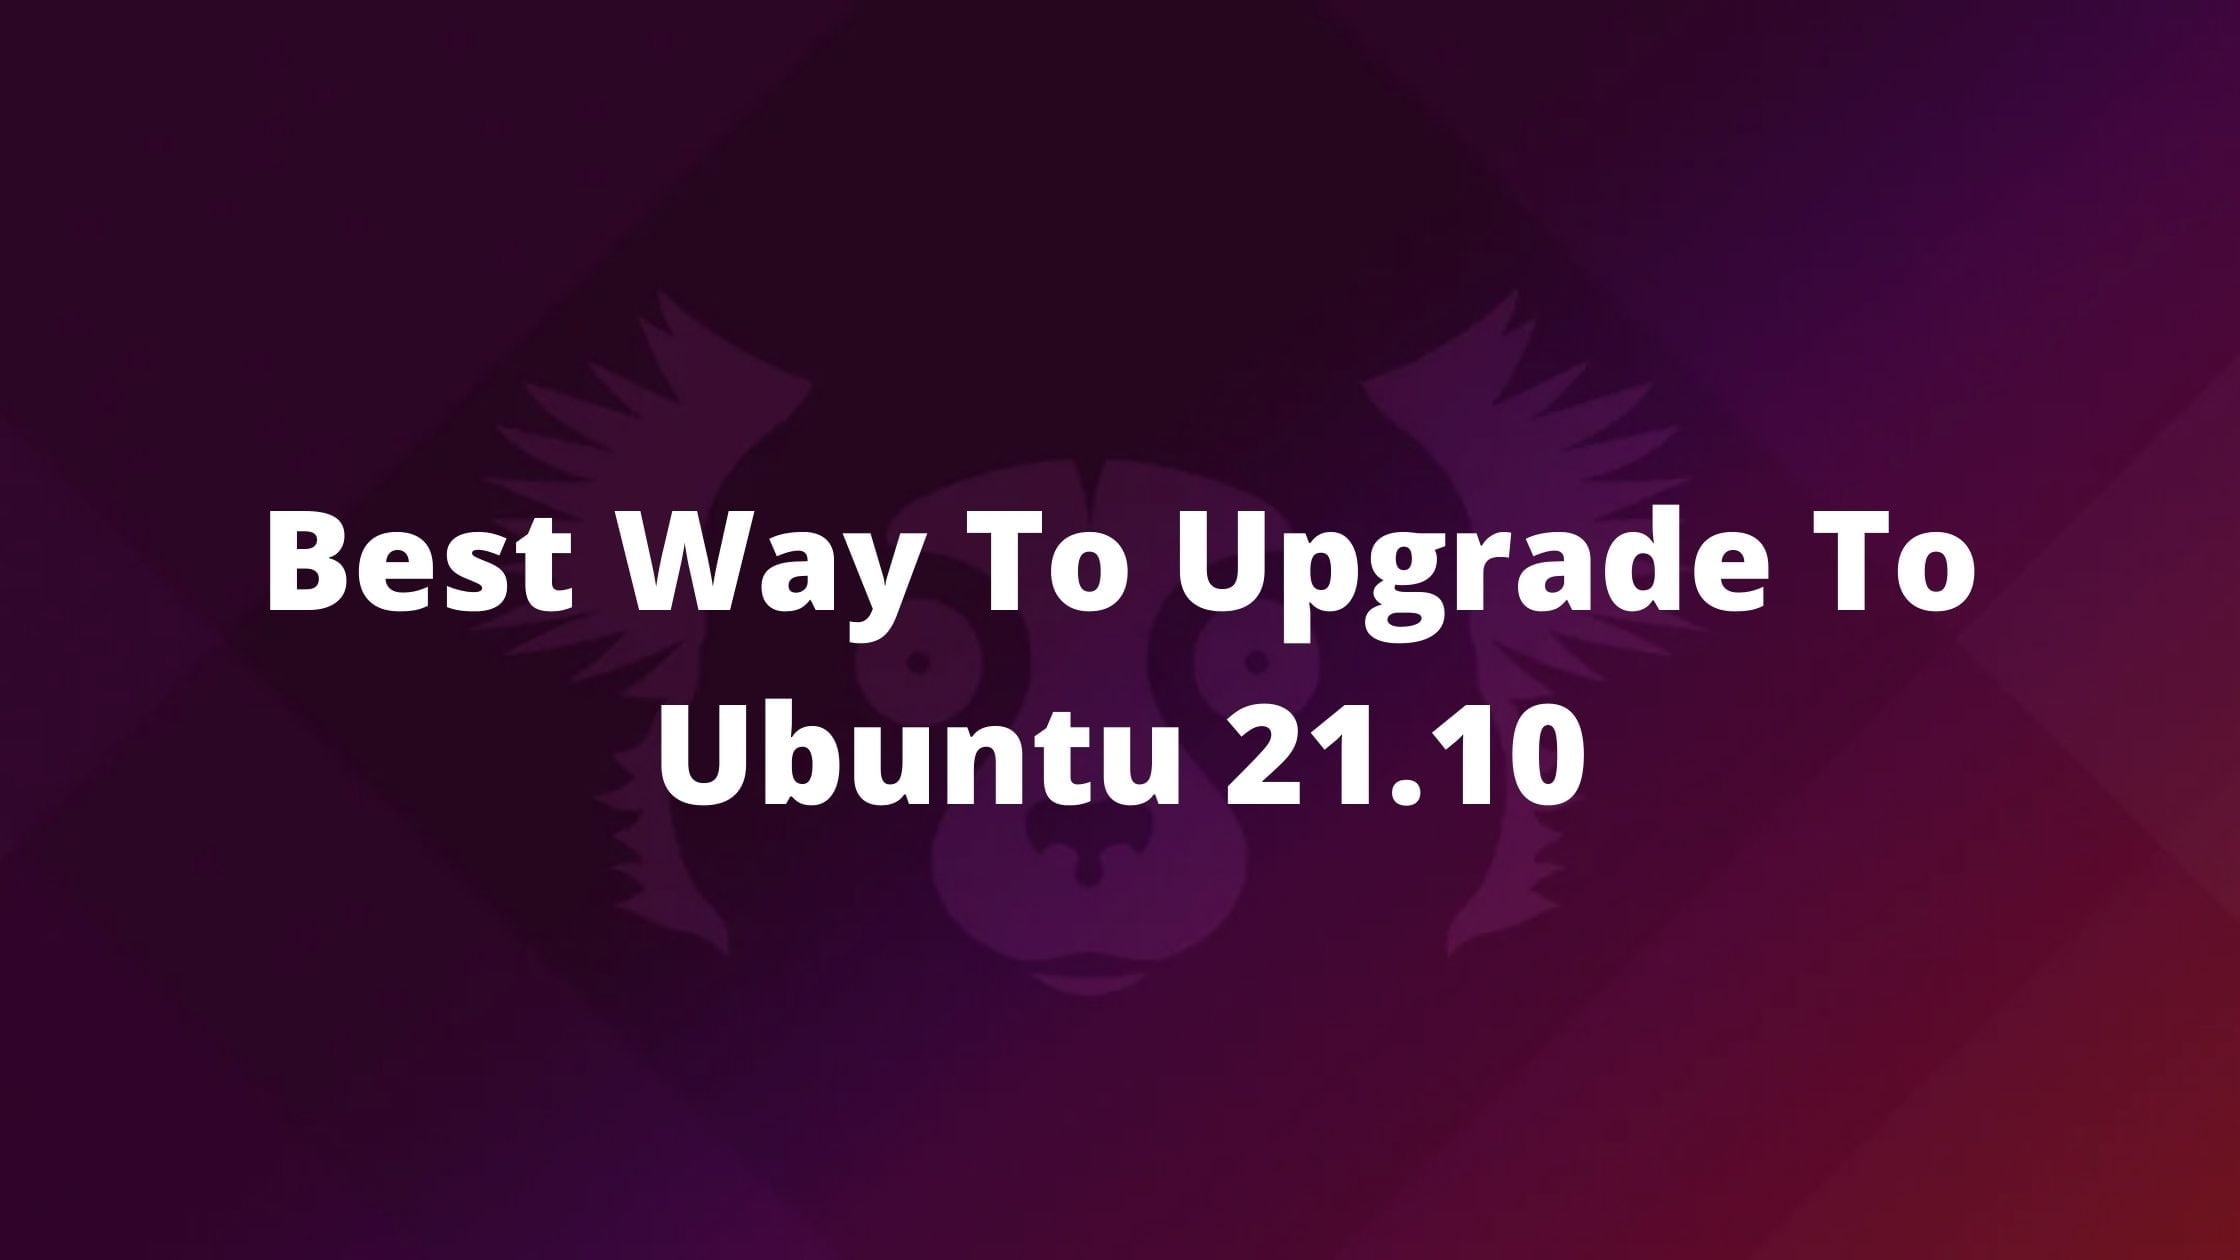 Best Way To Upgrade To Ubuntu 21.10